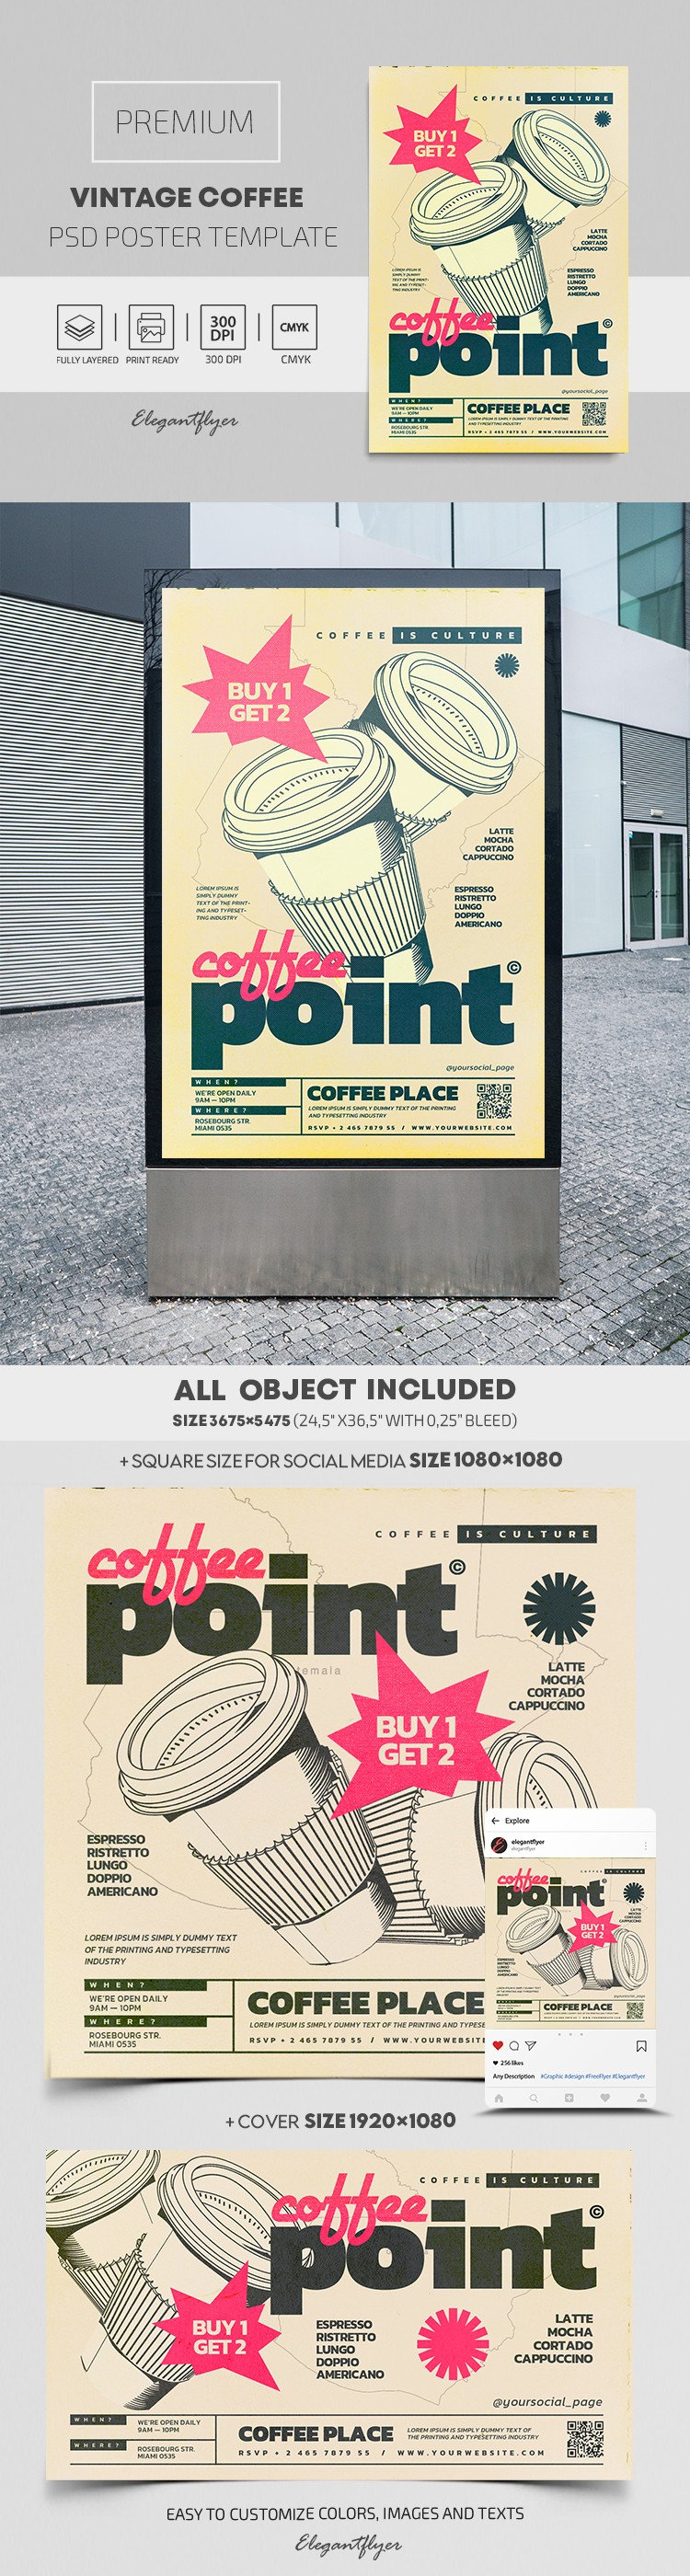 Vintage Kaffee-Plakat by ElegantFlyer